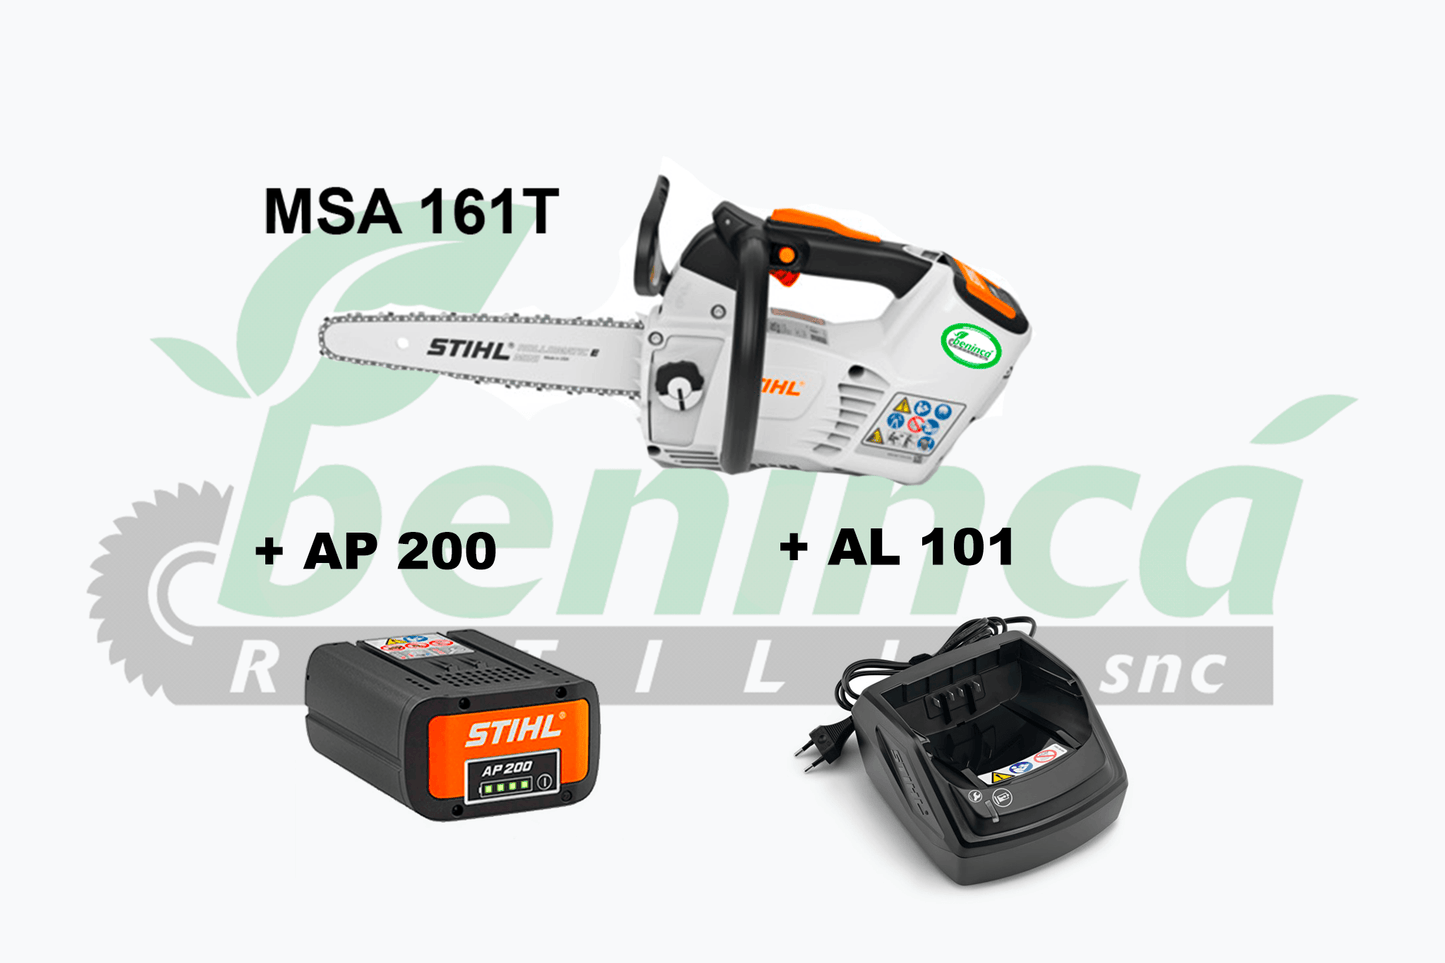 MSA 161 T + AP 200 + AL 101